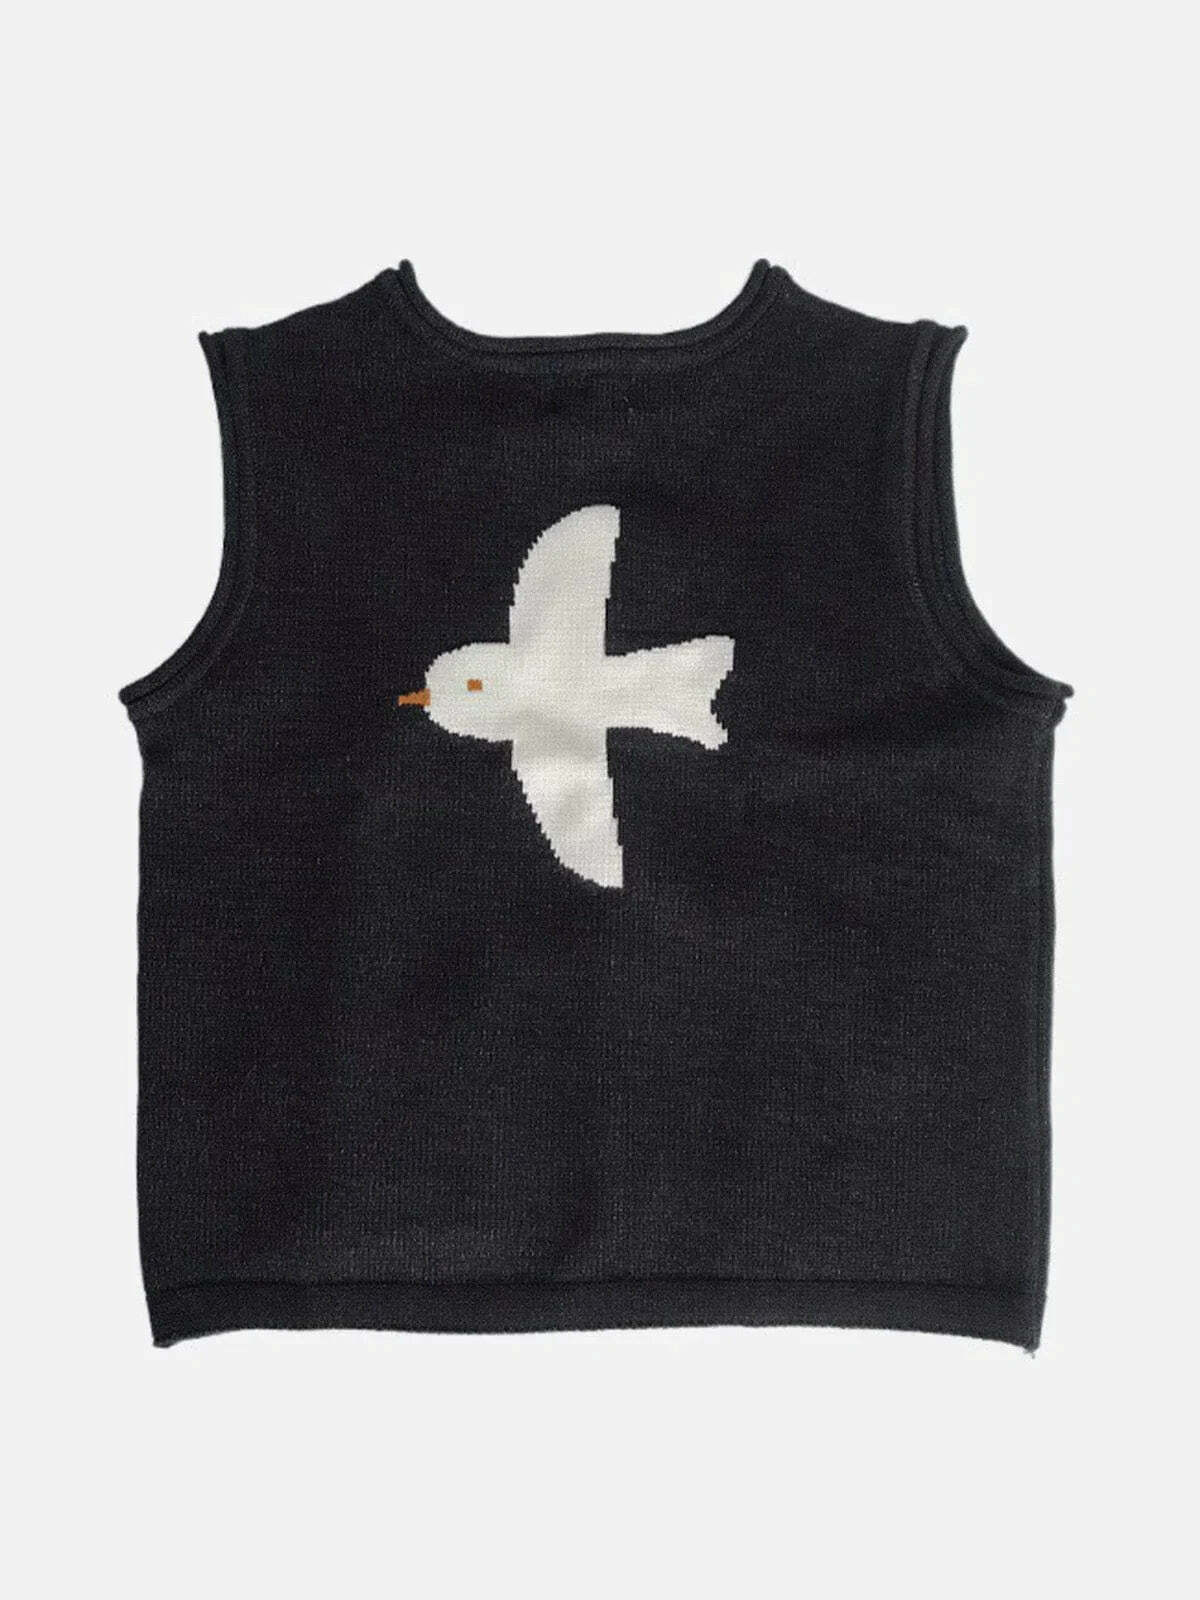 retro flying bird sweater edgy  chic y2k vest 5314